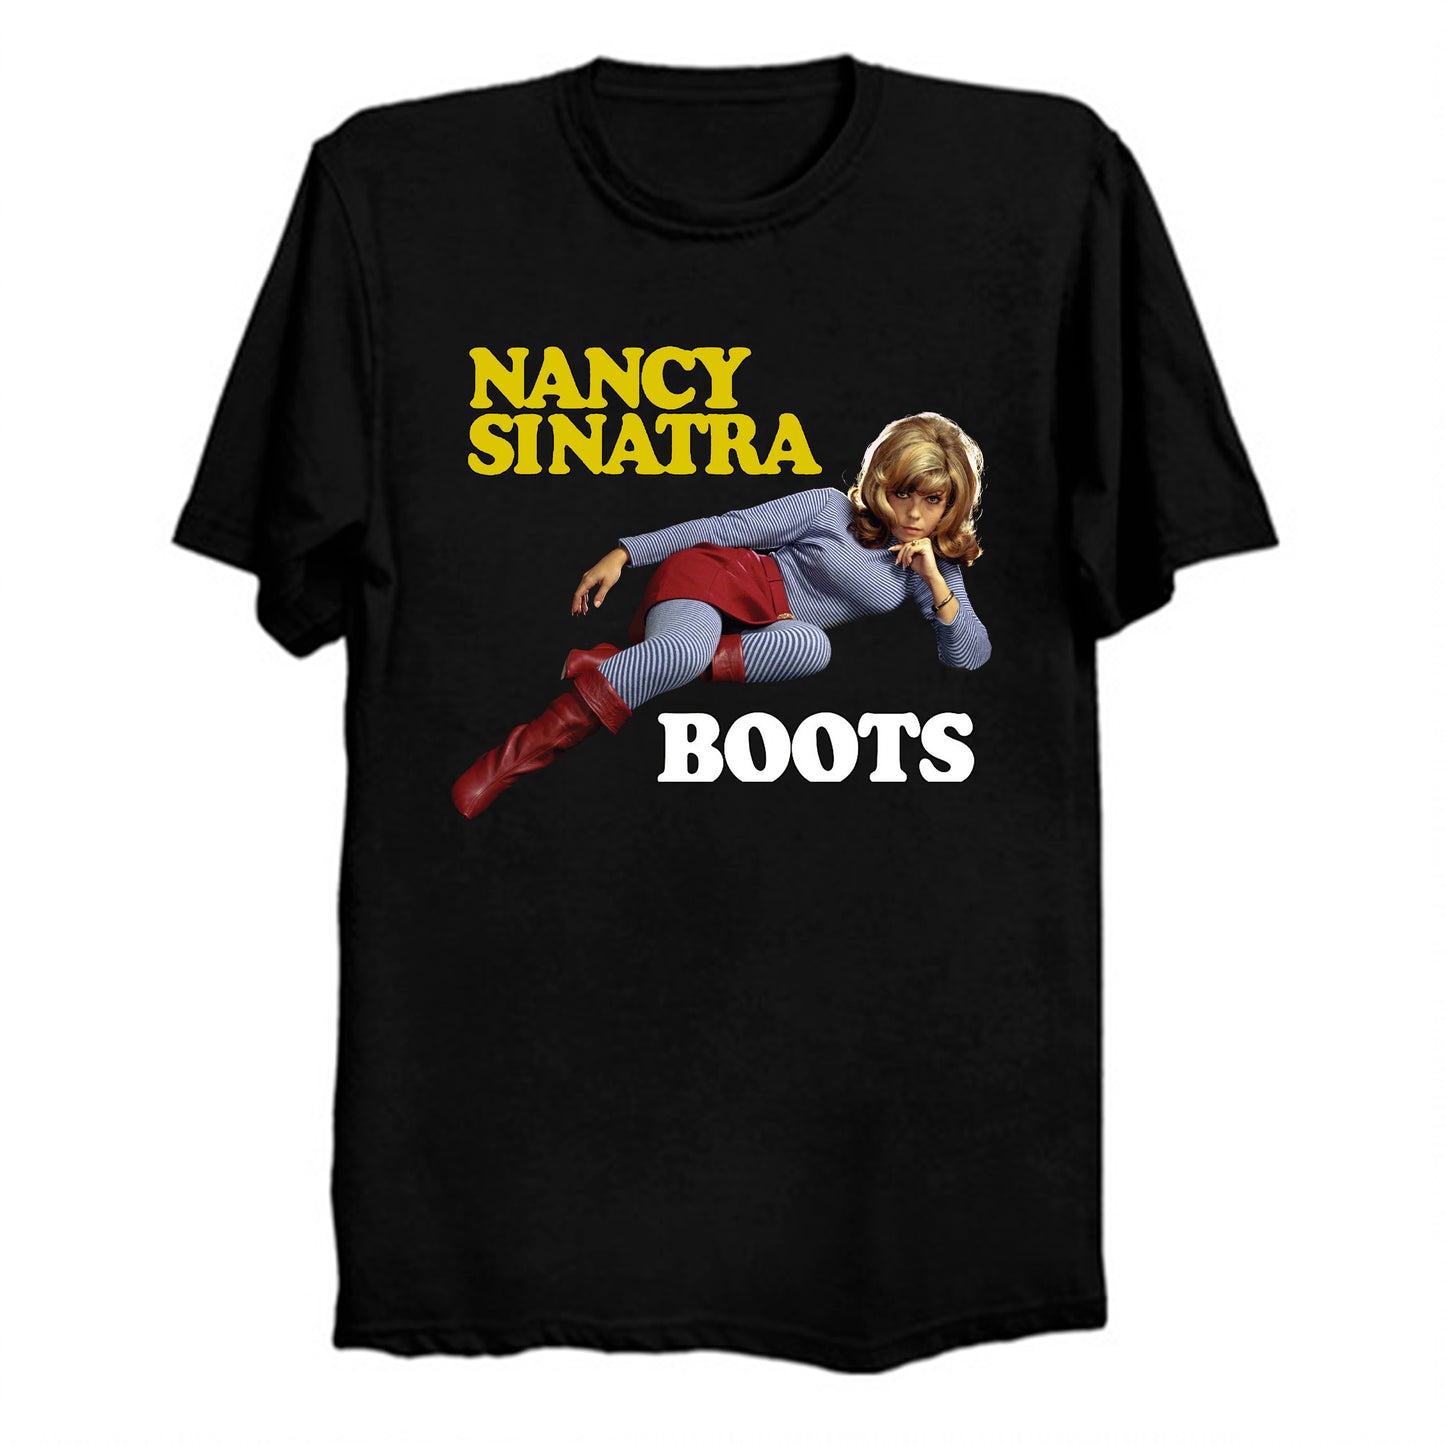 Nancy Sinatra Boots T-Shirt